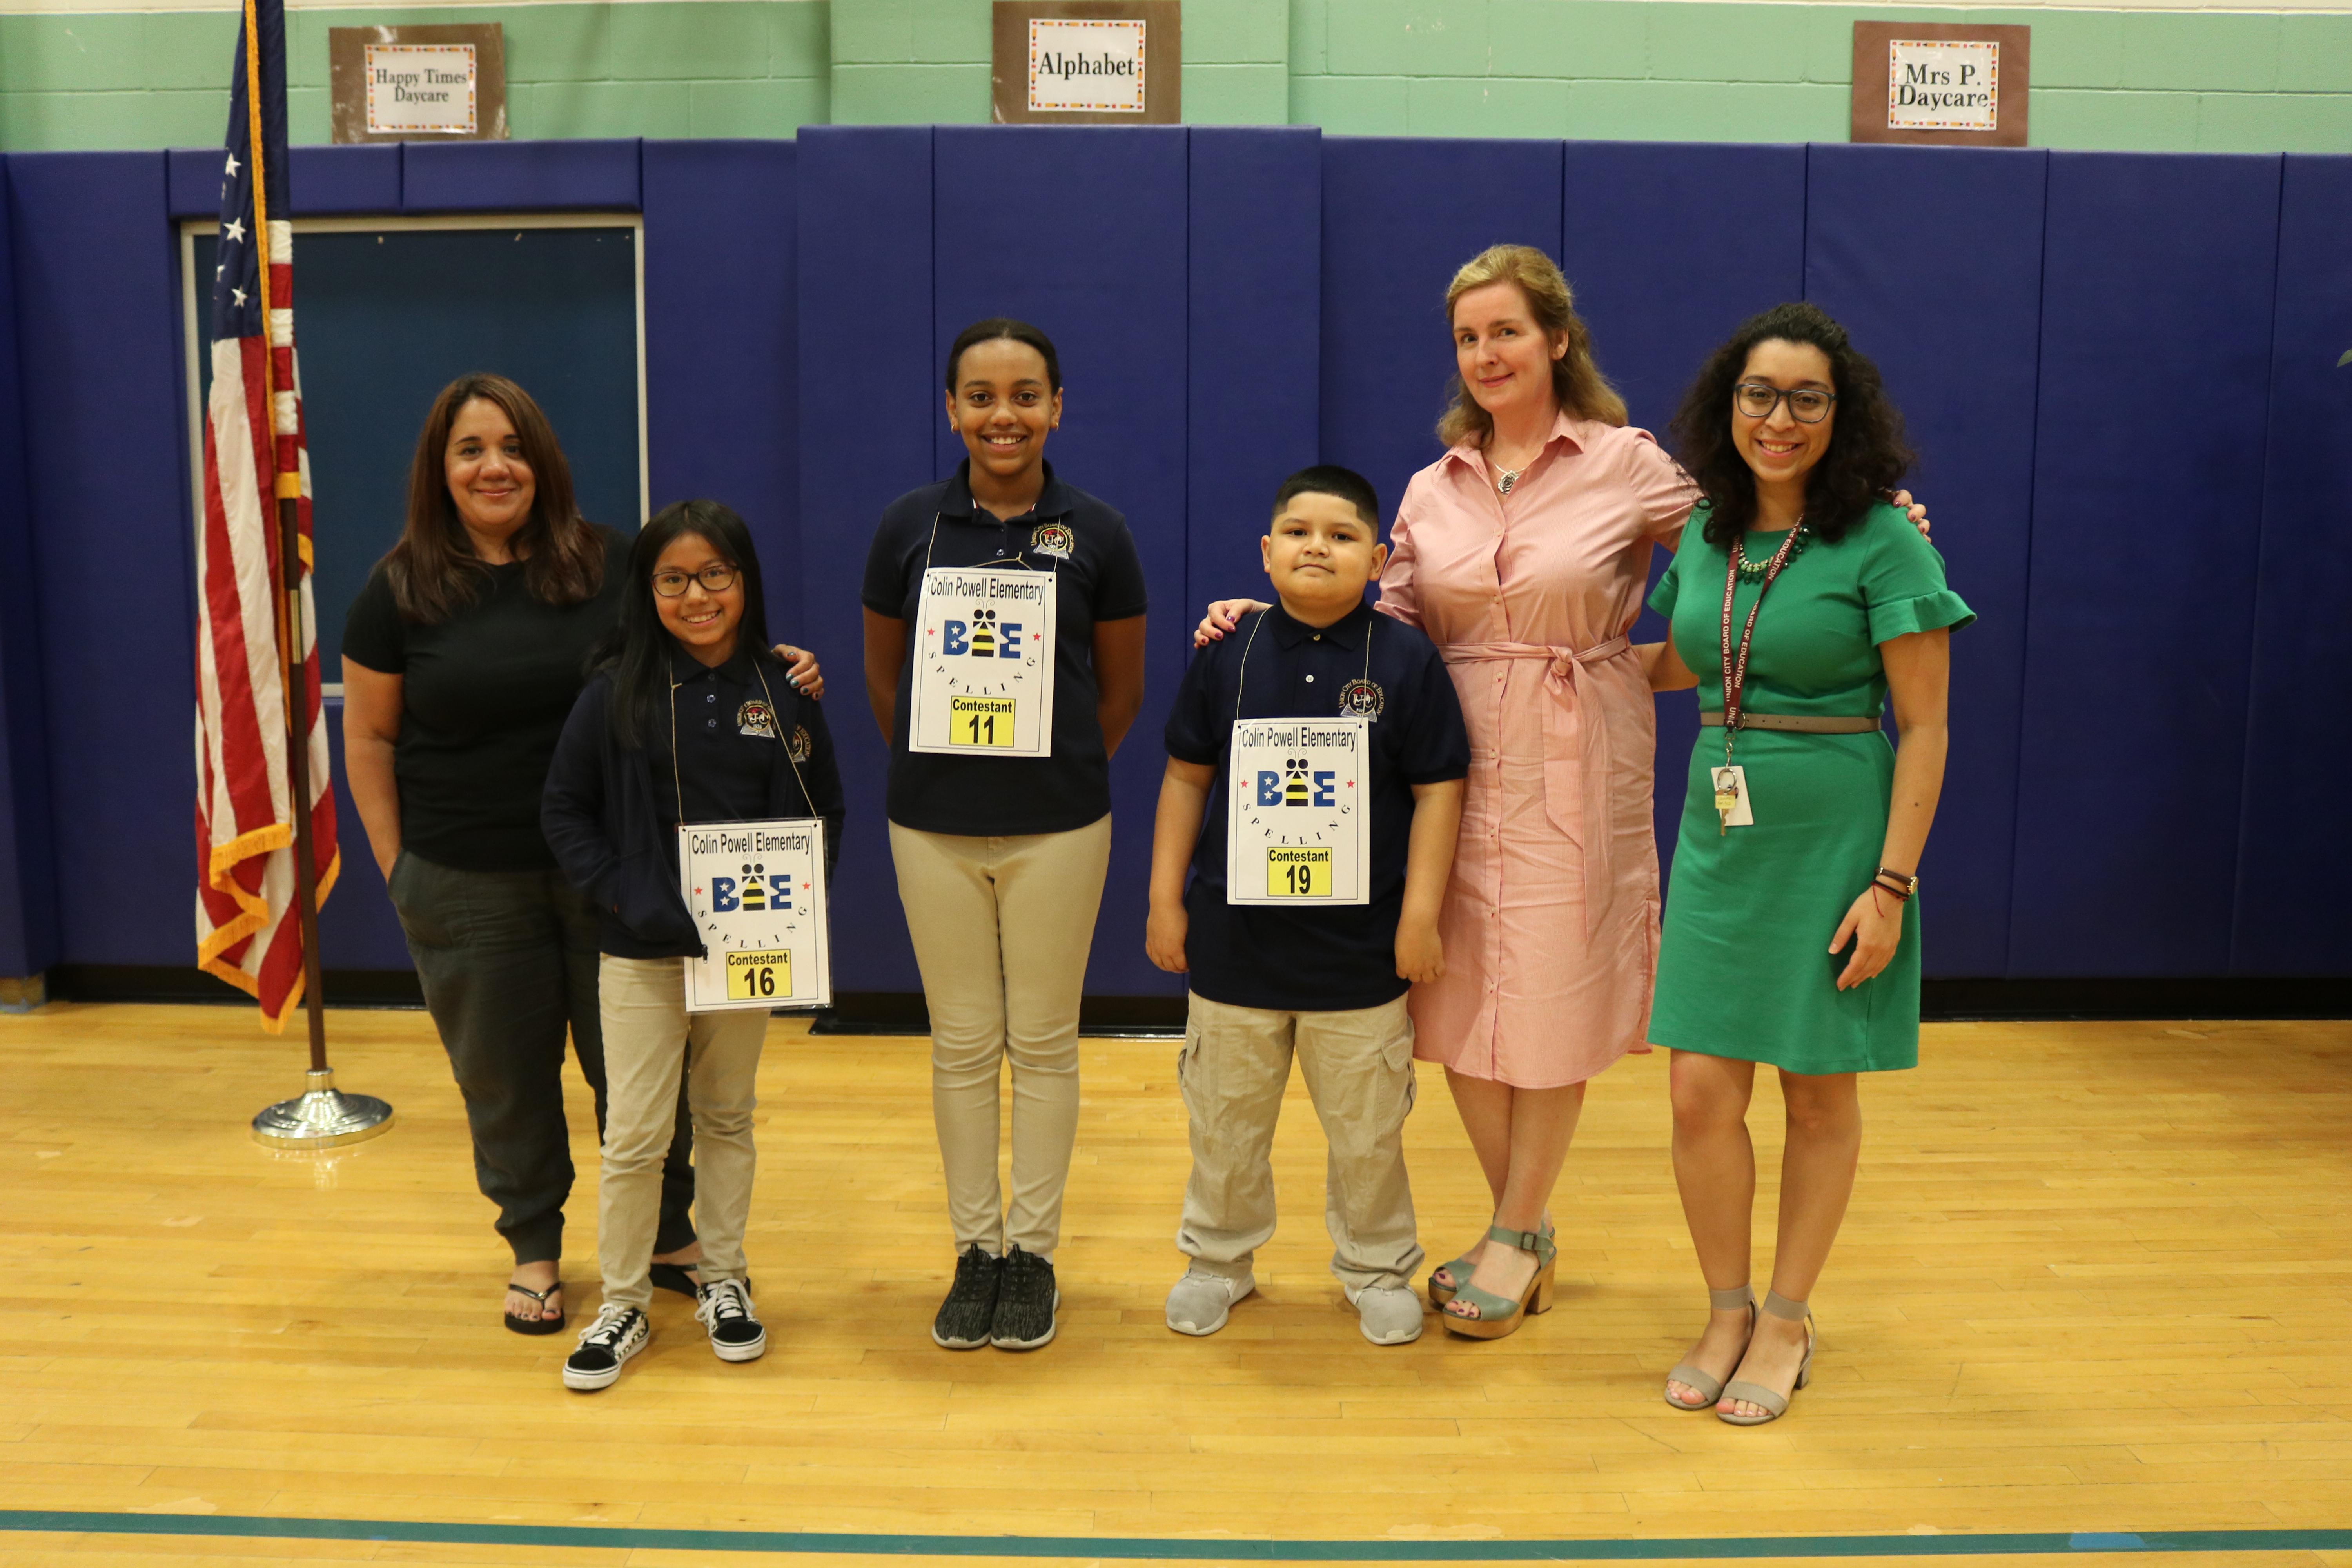 Spelling Bee teachers and top 3 contestants